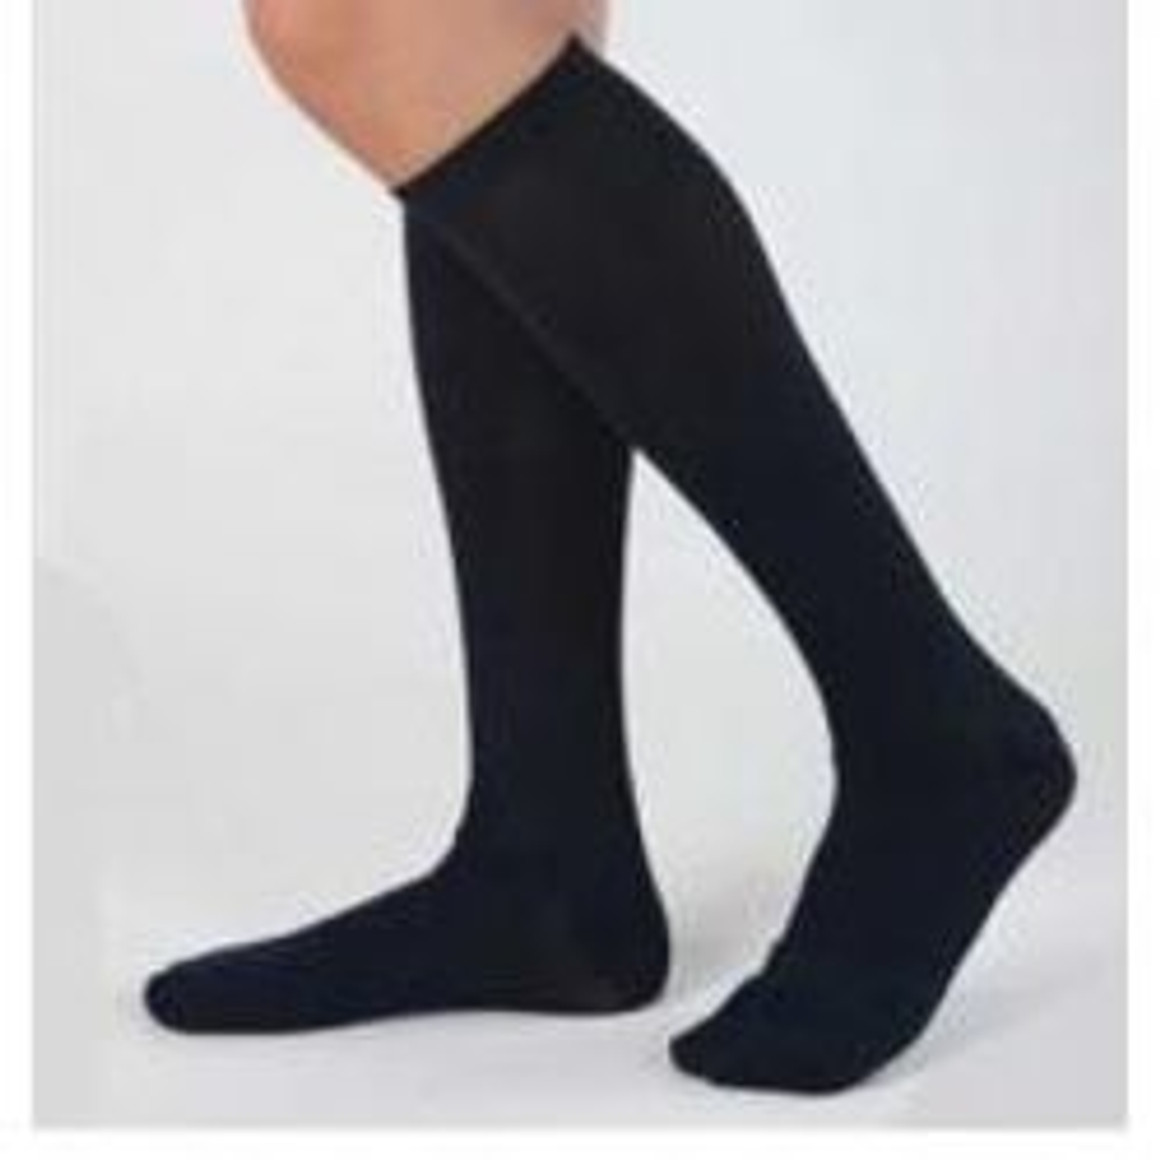 Carolon Company Multi-Layer Ulcer Stocking, Knee Length, Size E, Regular, Black